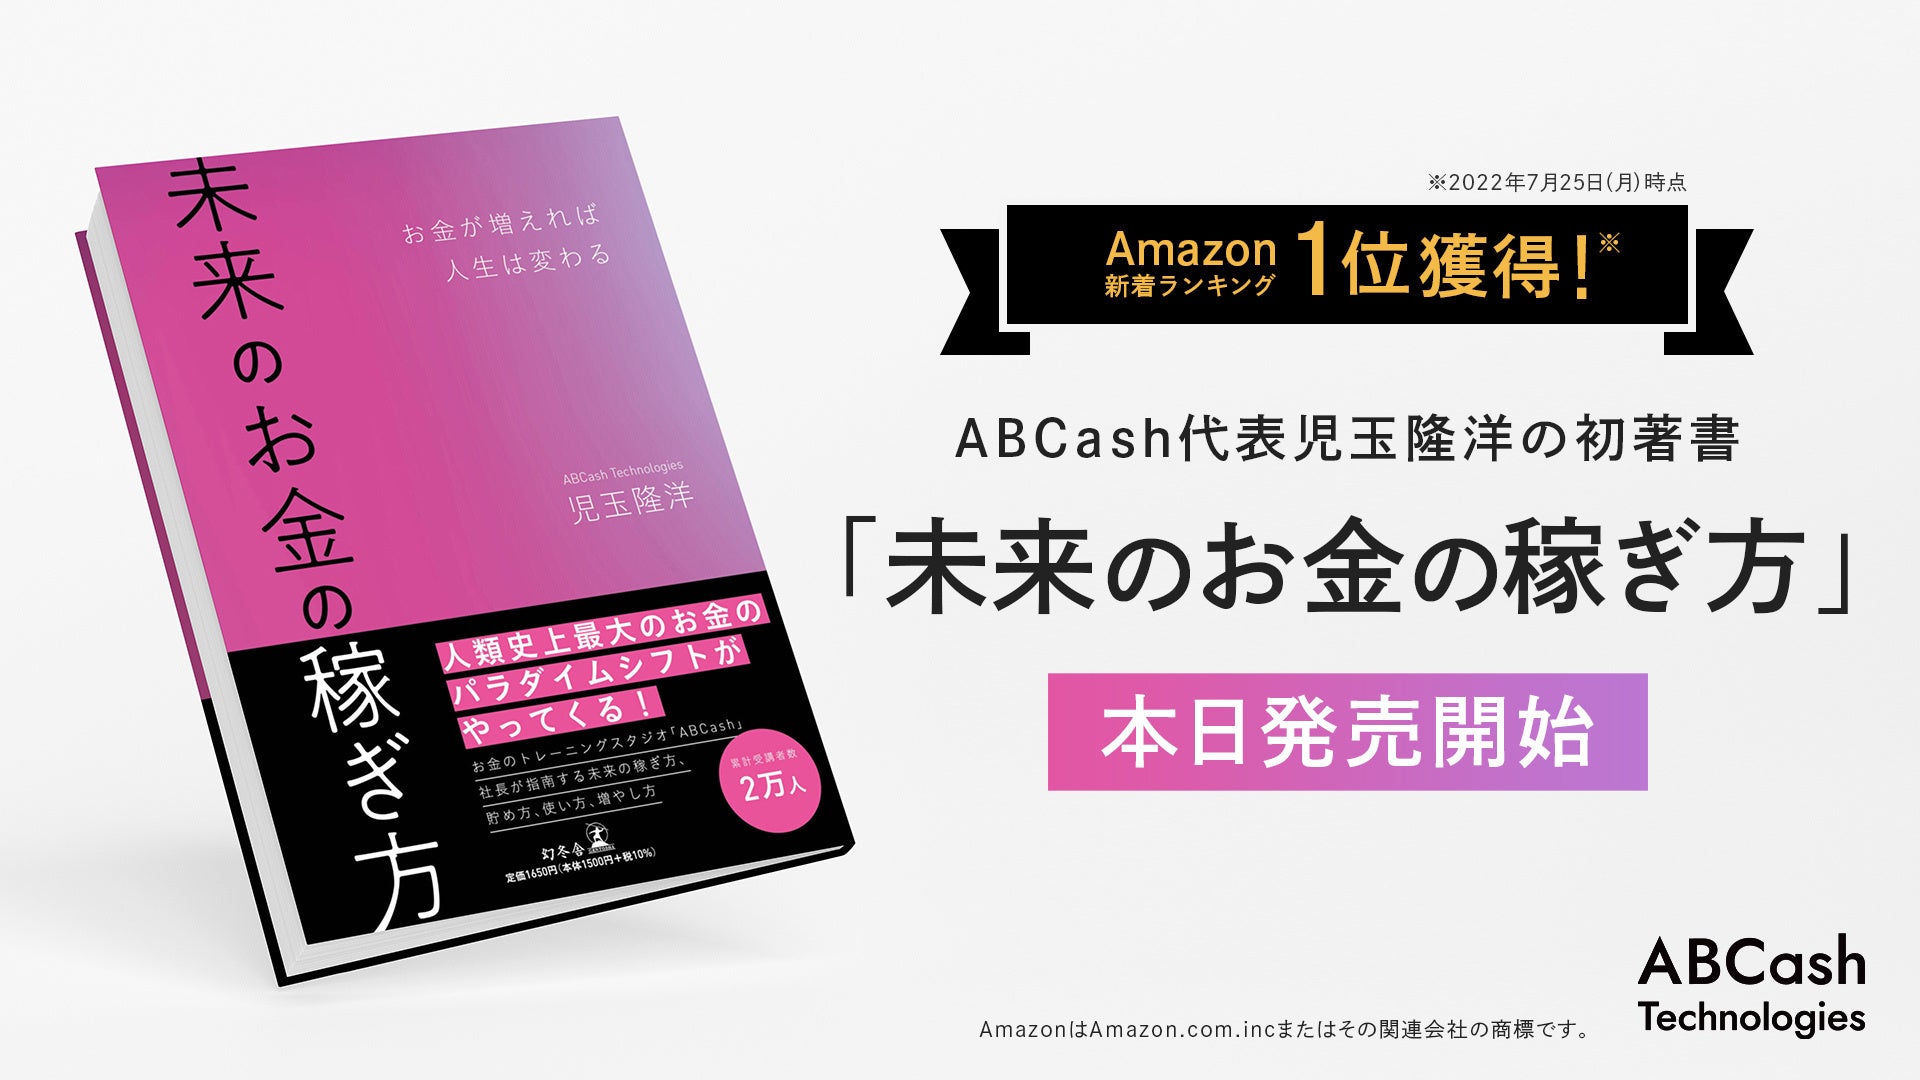 Amazon新着ランキング1位※獲得！ABCash代表児玉隆洋の初著書「未来のお金の稼ぎ方」、本日より発売開始